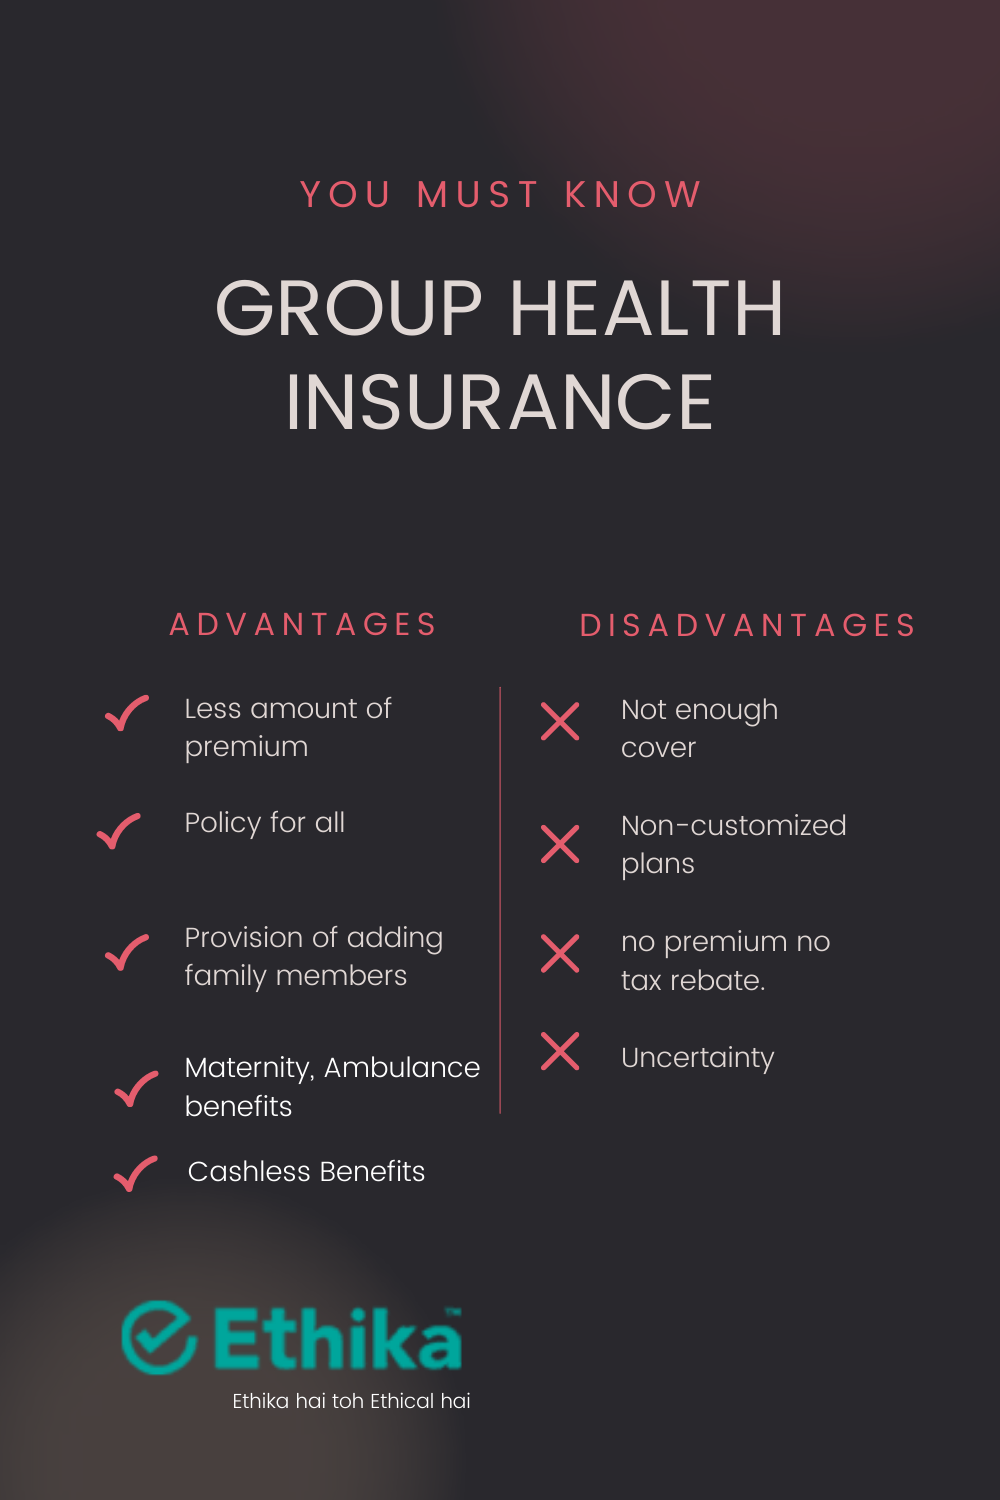 Group health insurance advantages and disadvantages - list